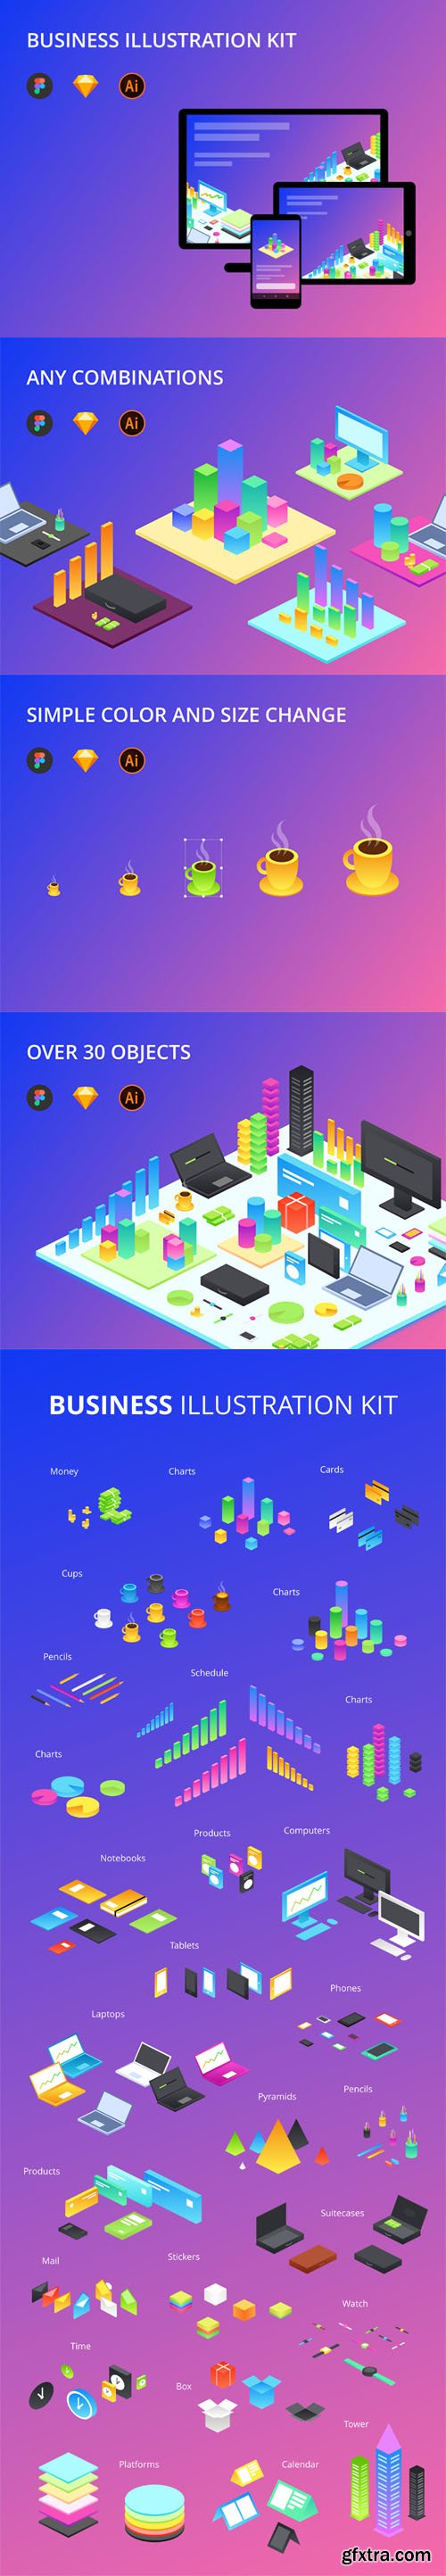 Business Illustration kit - 30 Object Business Illustration kit